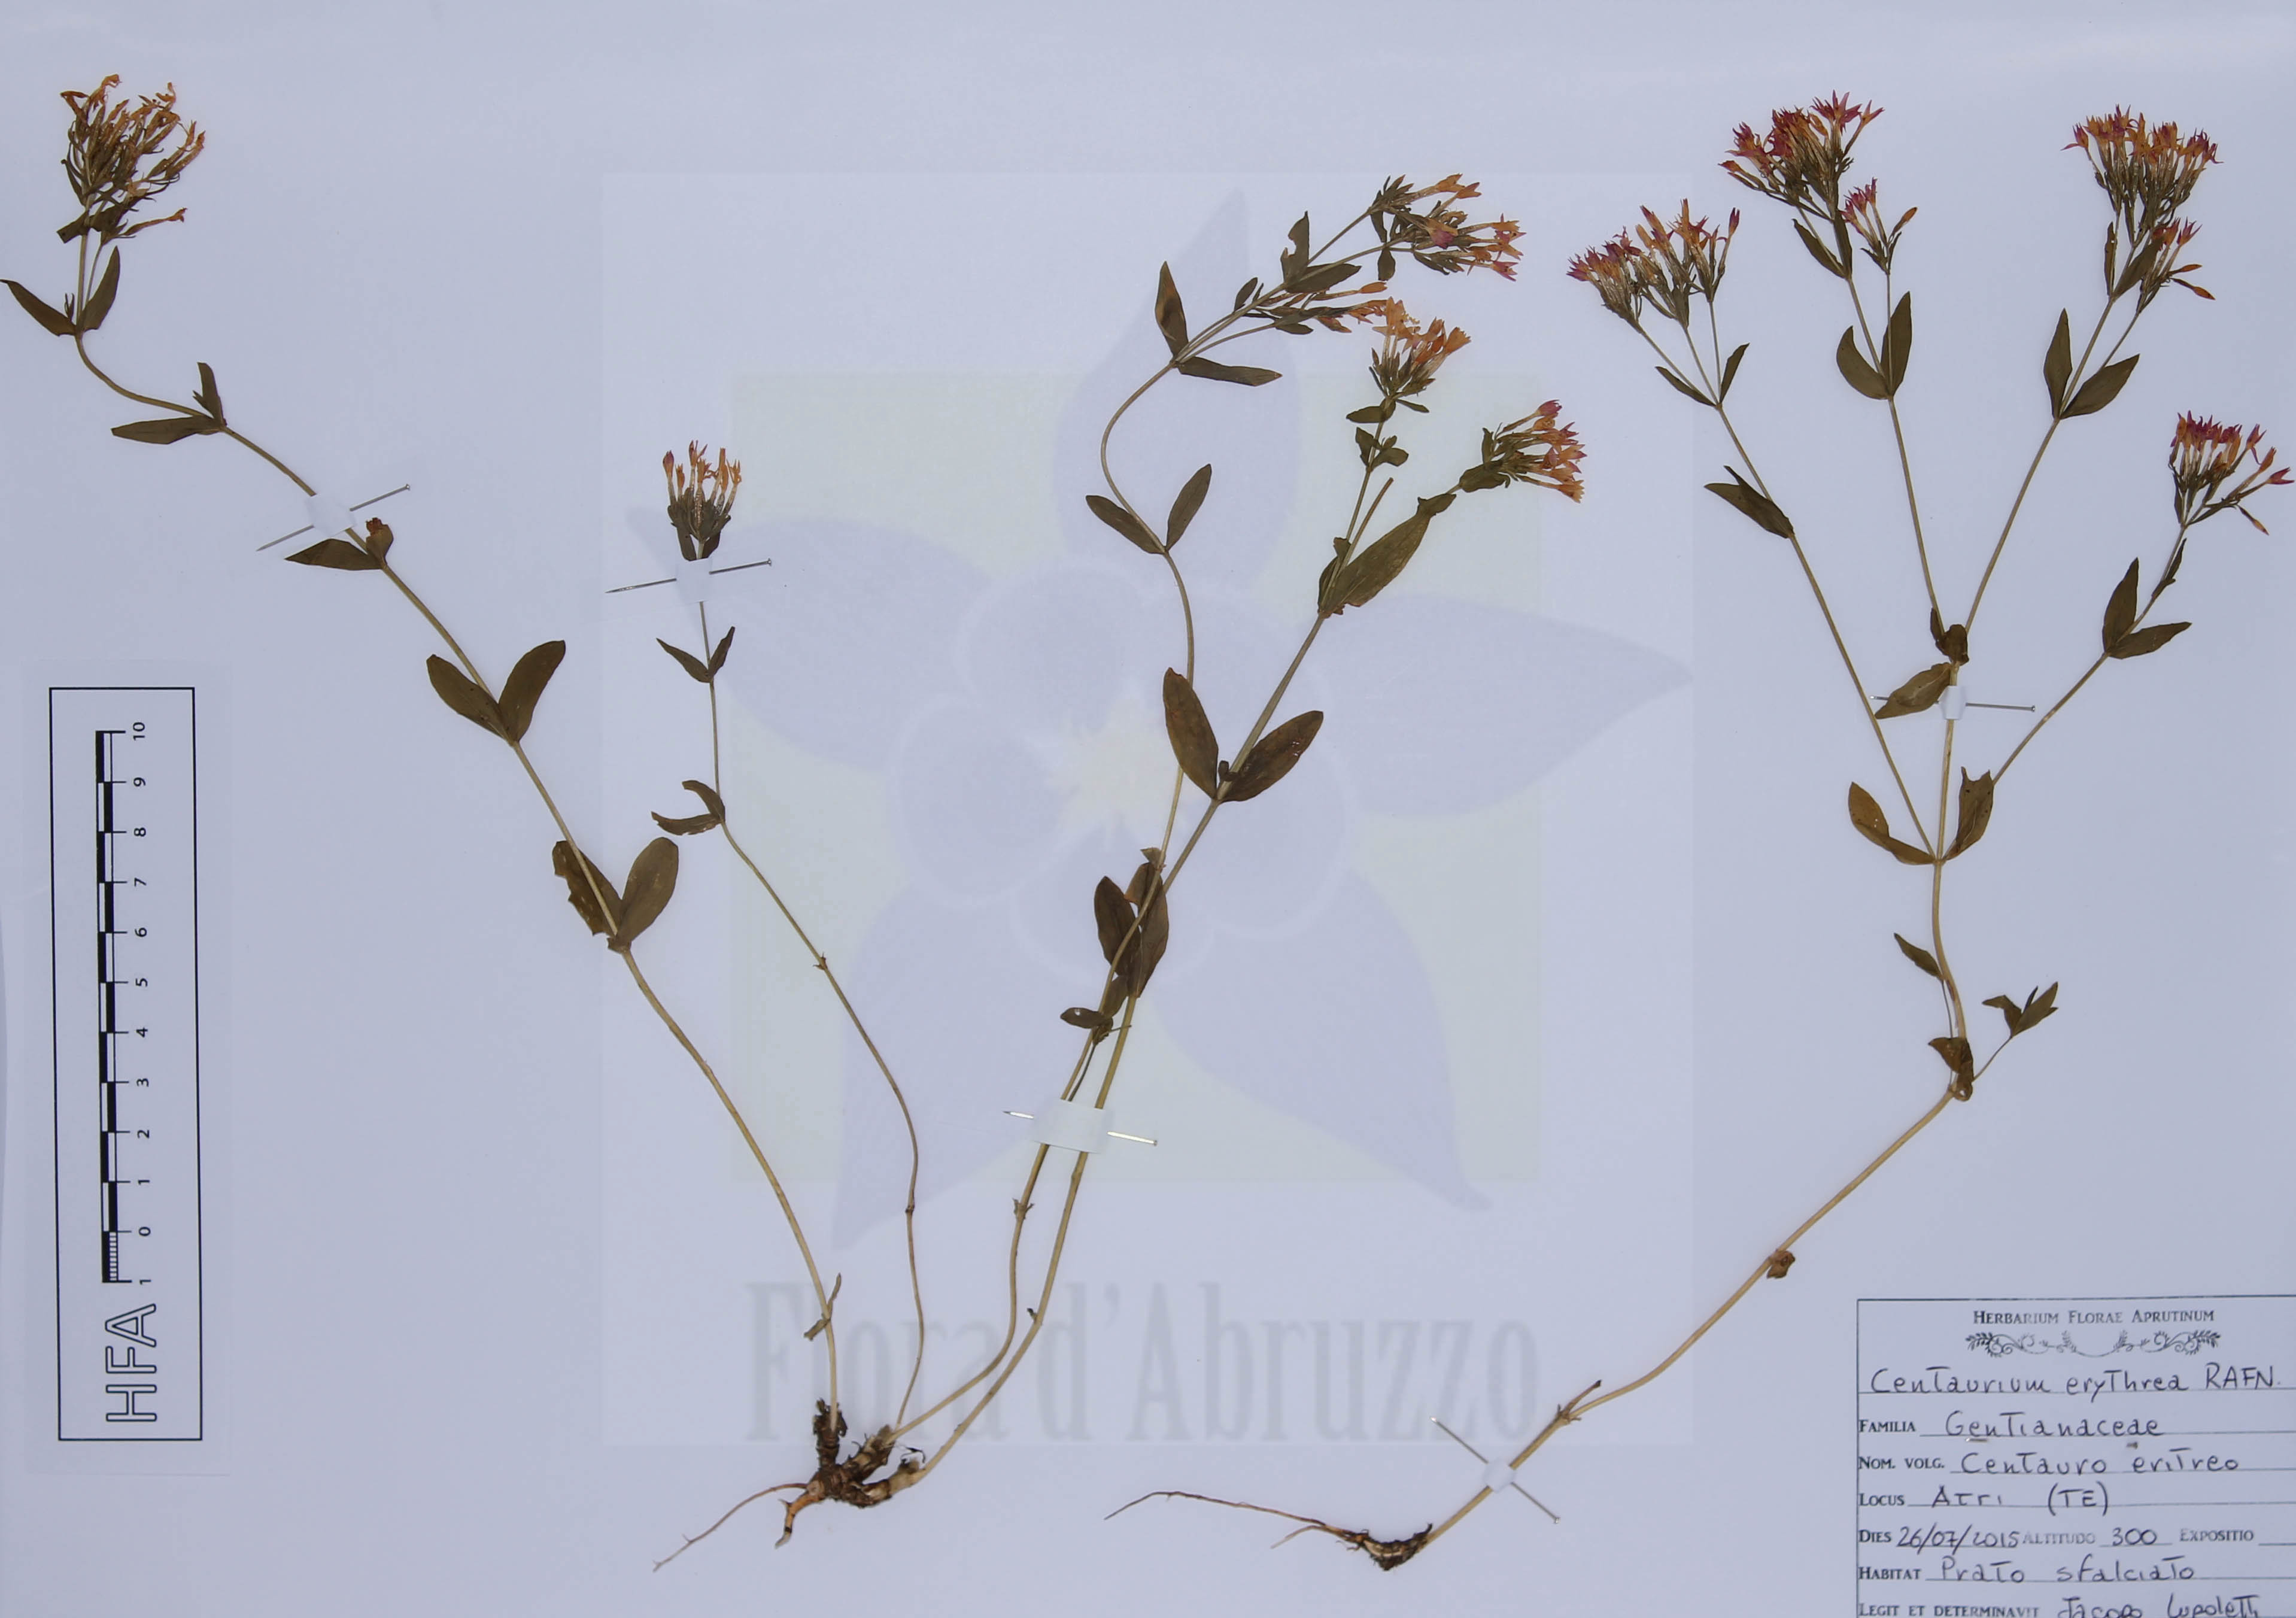 Centaurium erythraea Rafn